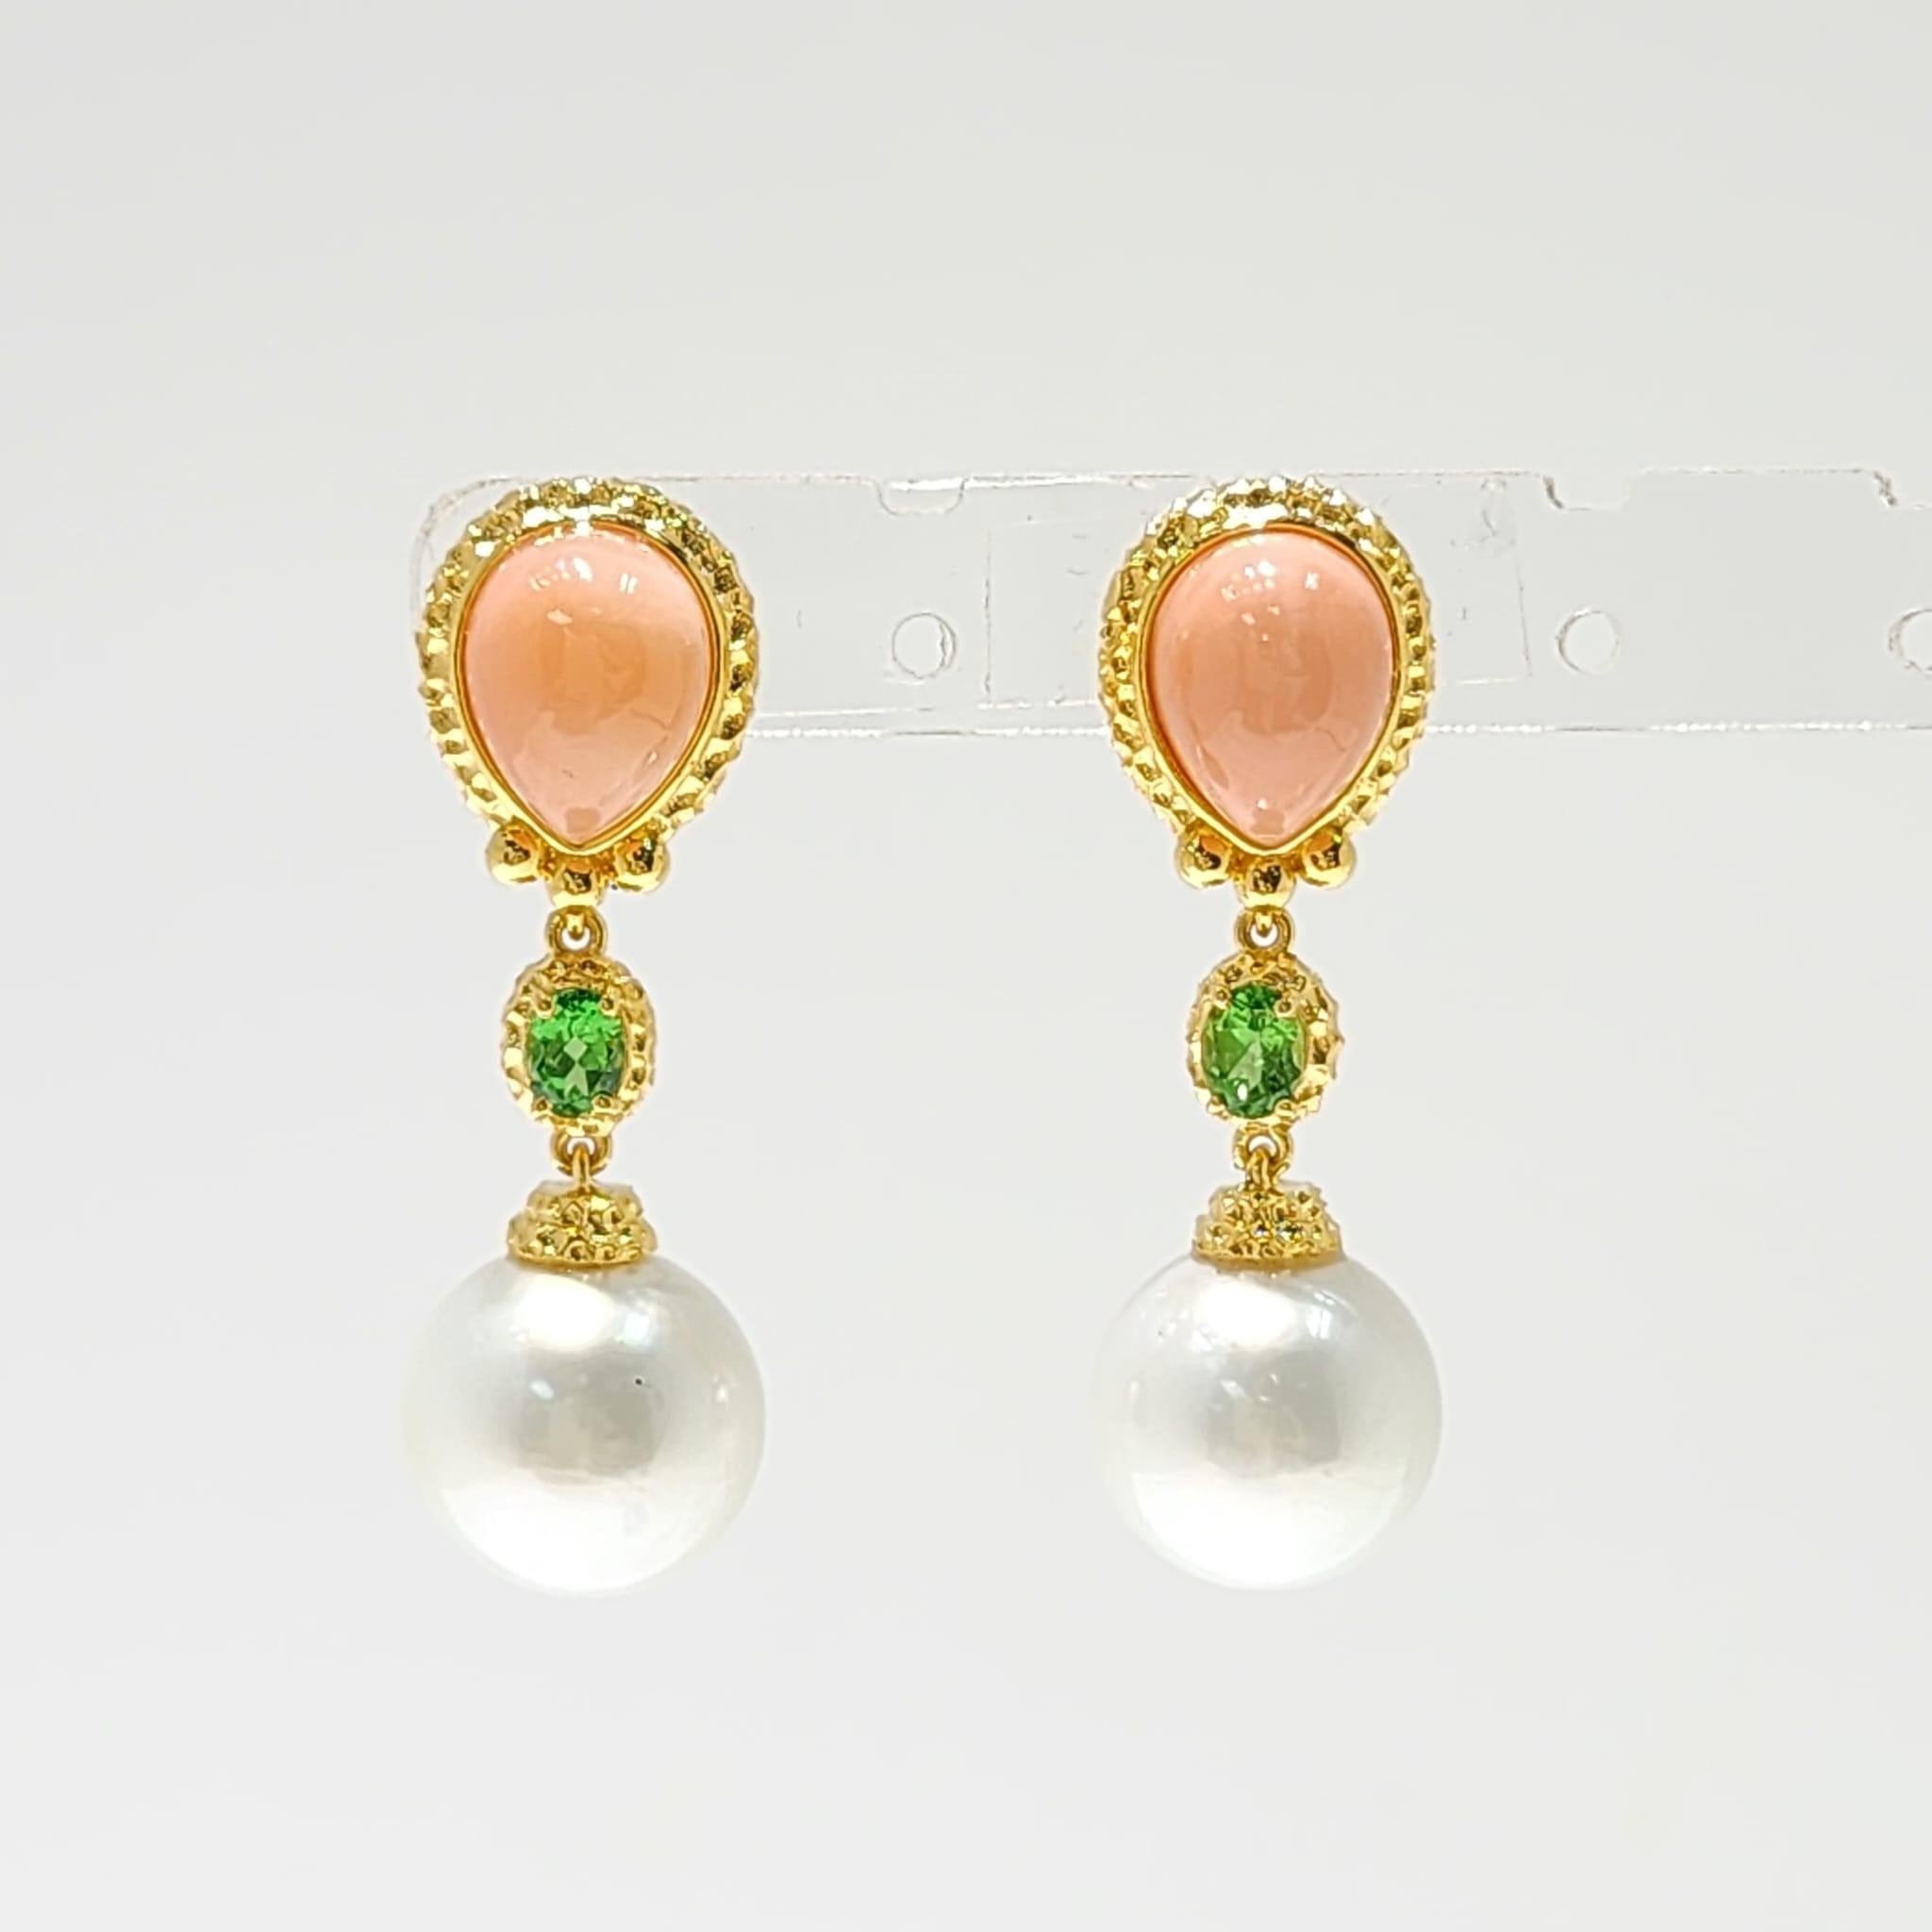 Women's South Sea Pearl Coral Drop Earrings in 18K Gold Vermeil Sterling Silver For Sale